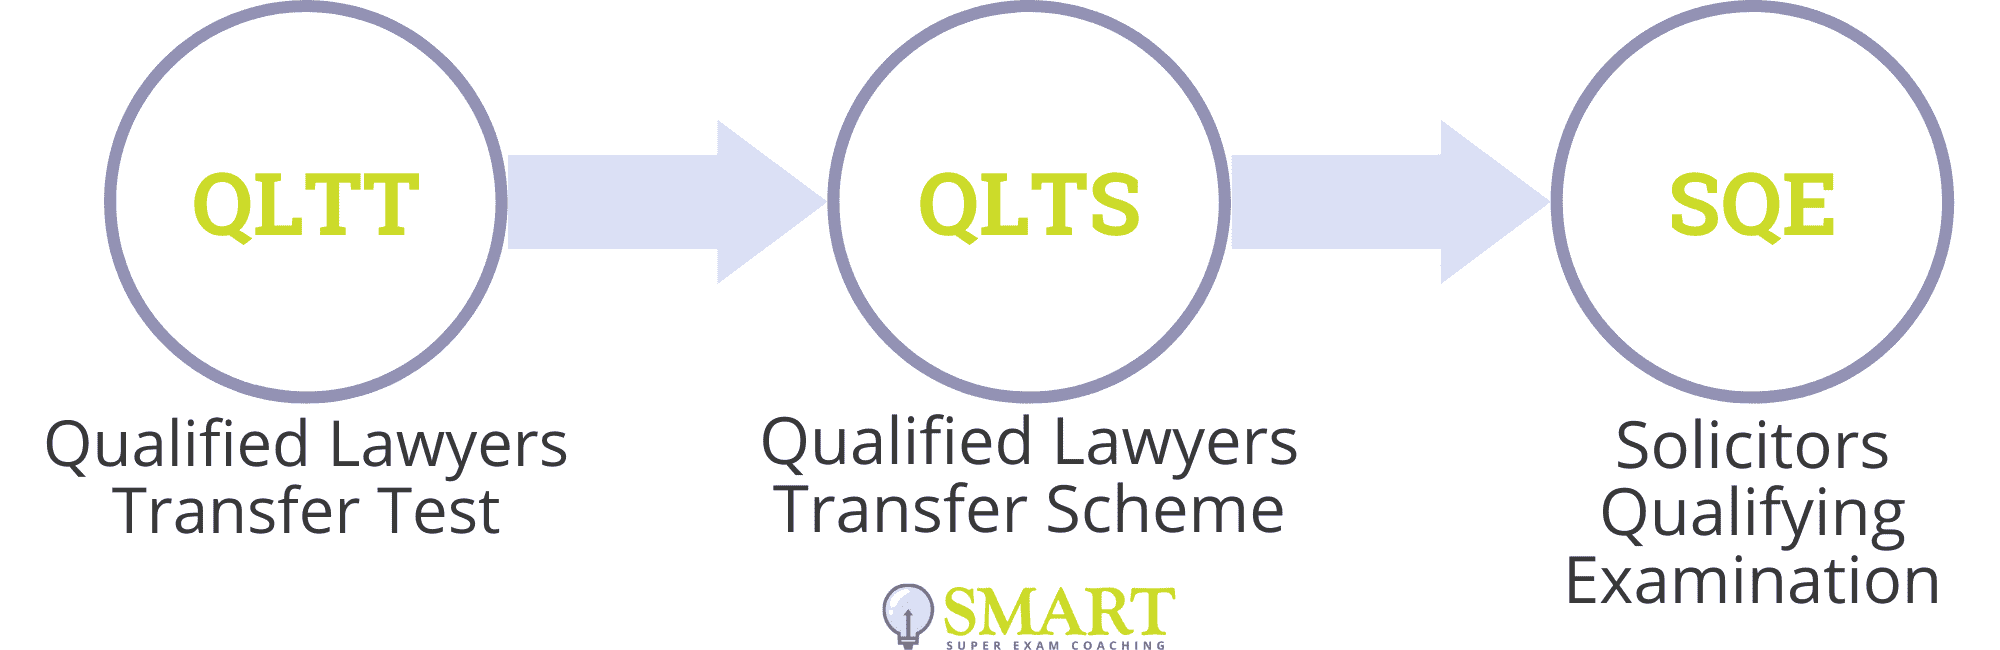 The Qualified Lawyers Transfer Scheme: QLTT, QLTS, SQE